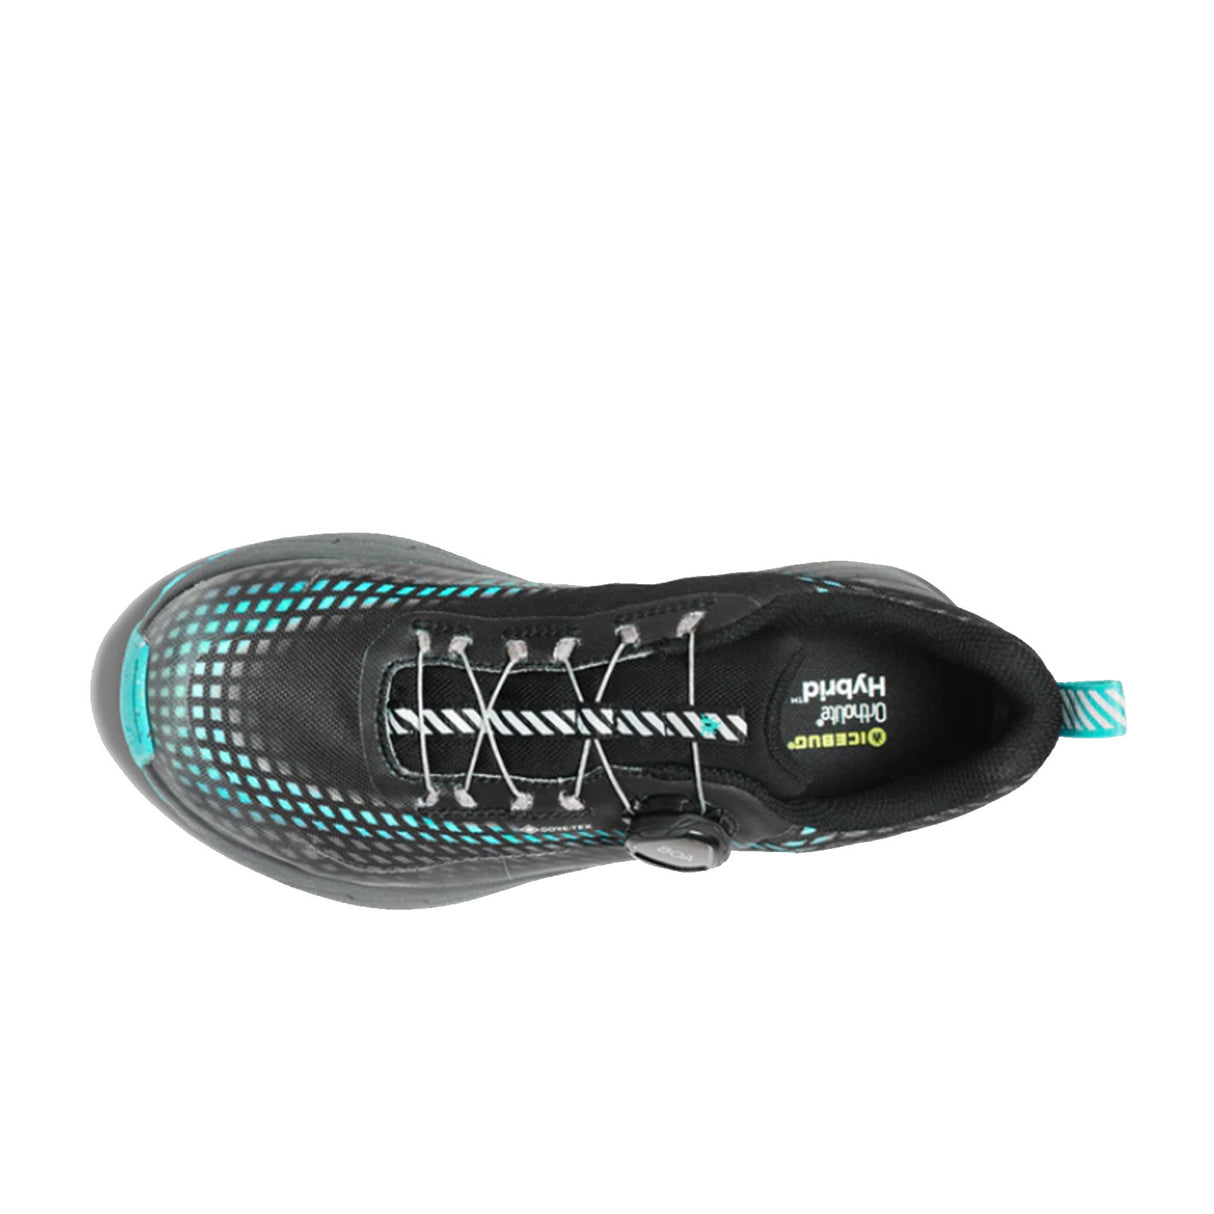 Icebug NewRun BUGrip GTX Running Shoe (Women) - Black/Jade Mist with Studs Athletic - Running - Stability - The Heel Shoe Fitters